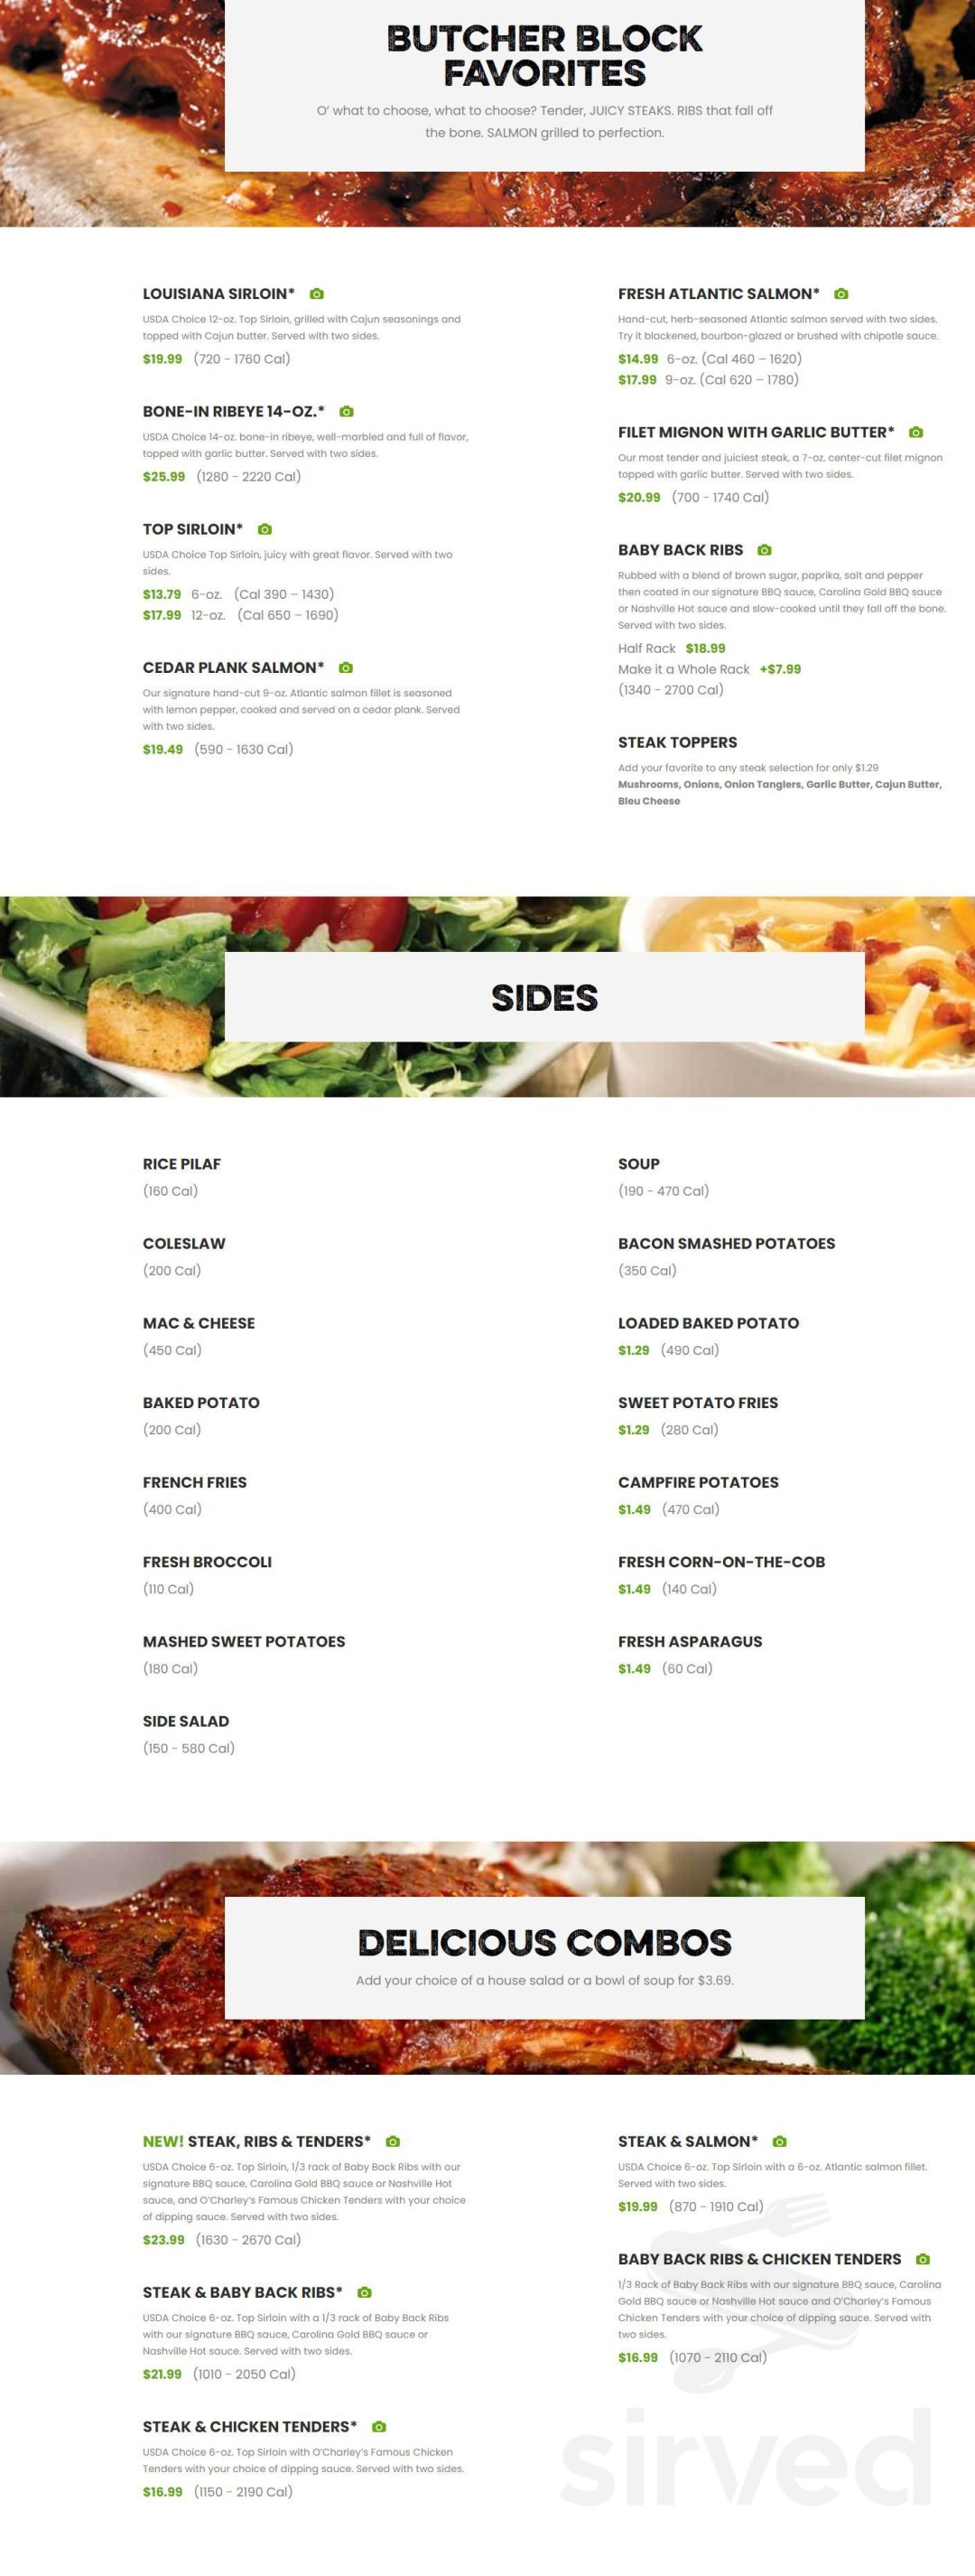 Picture of: O’charleys menu in McDonough, Georgia, USA